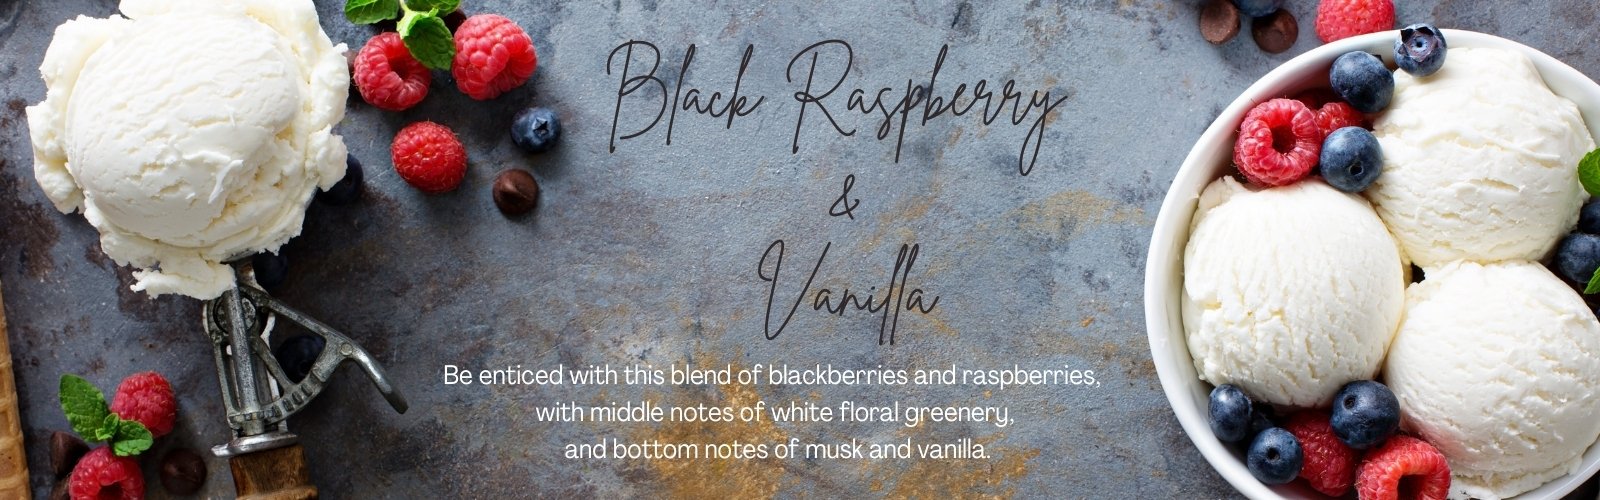 Black Raspberry and Vanilla Skin Care